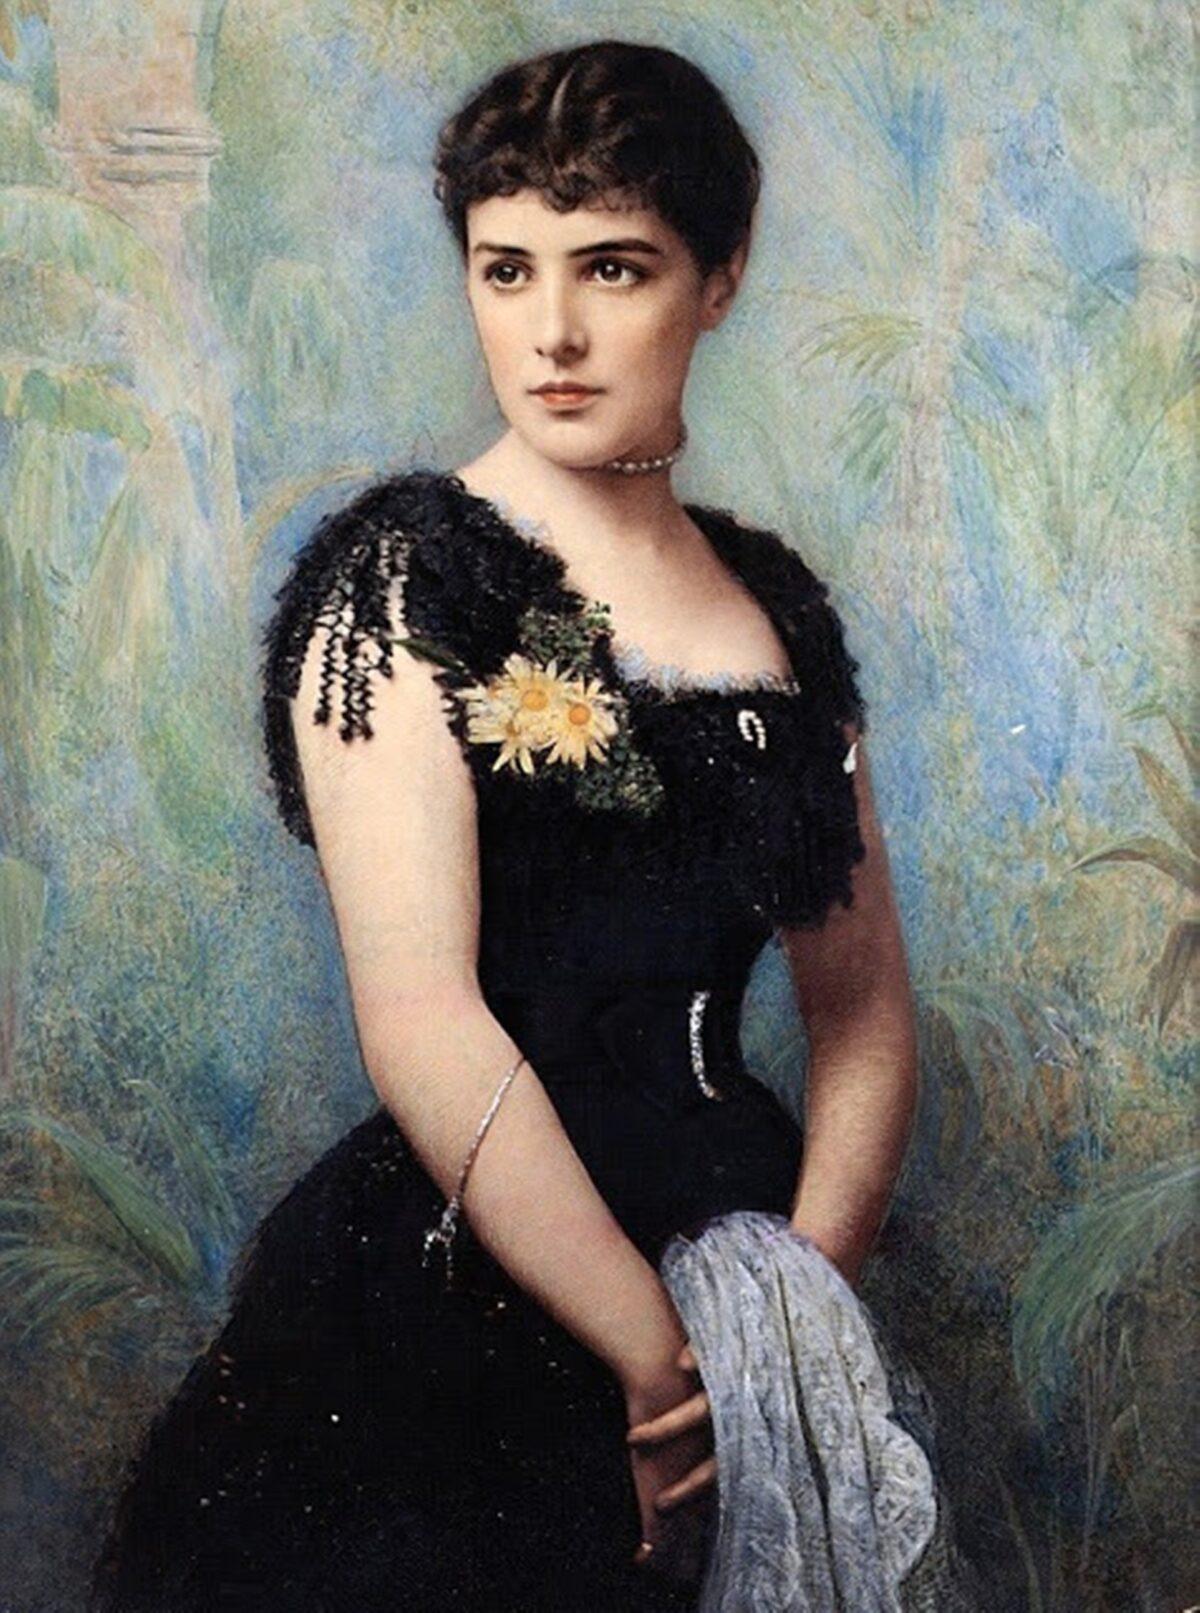 Jennie Churchill, formally Lady Randolph Churchill, circa 1880. (PD-US)